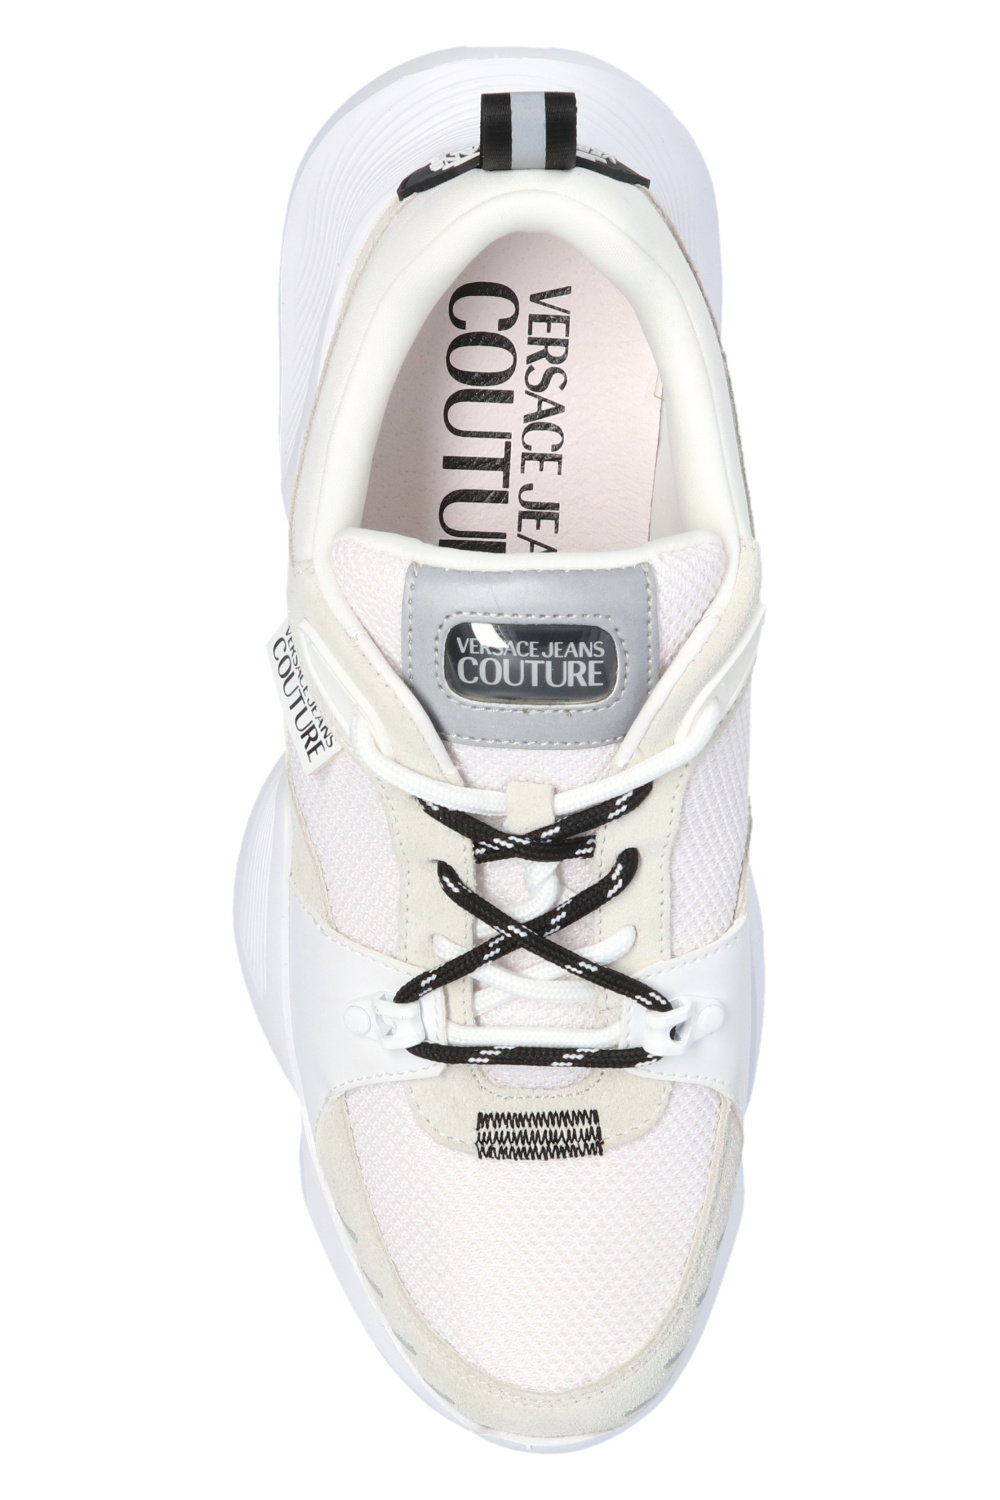 Emilia Clarke's Celebrity Statement Jump shoes ‘Gravity’ sneakers